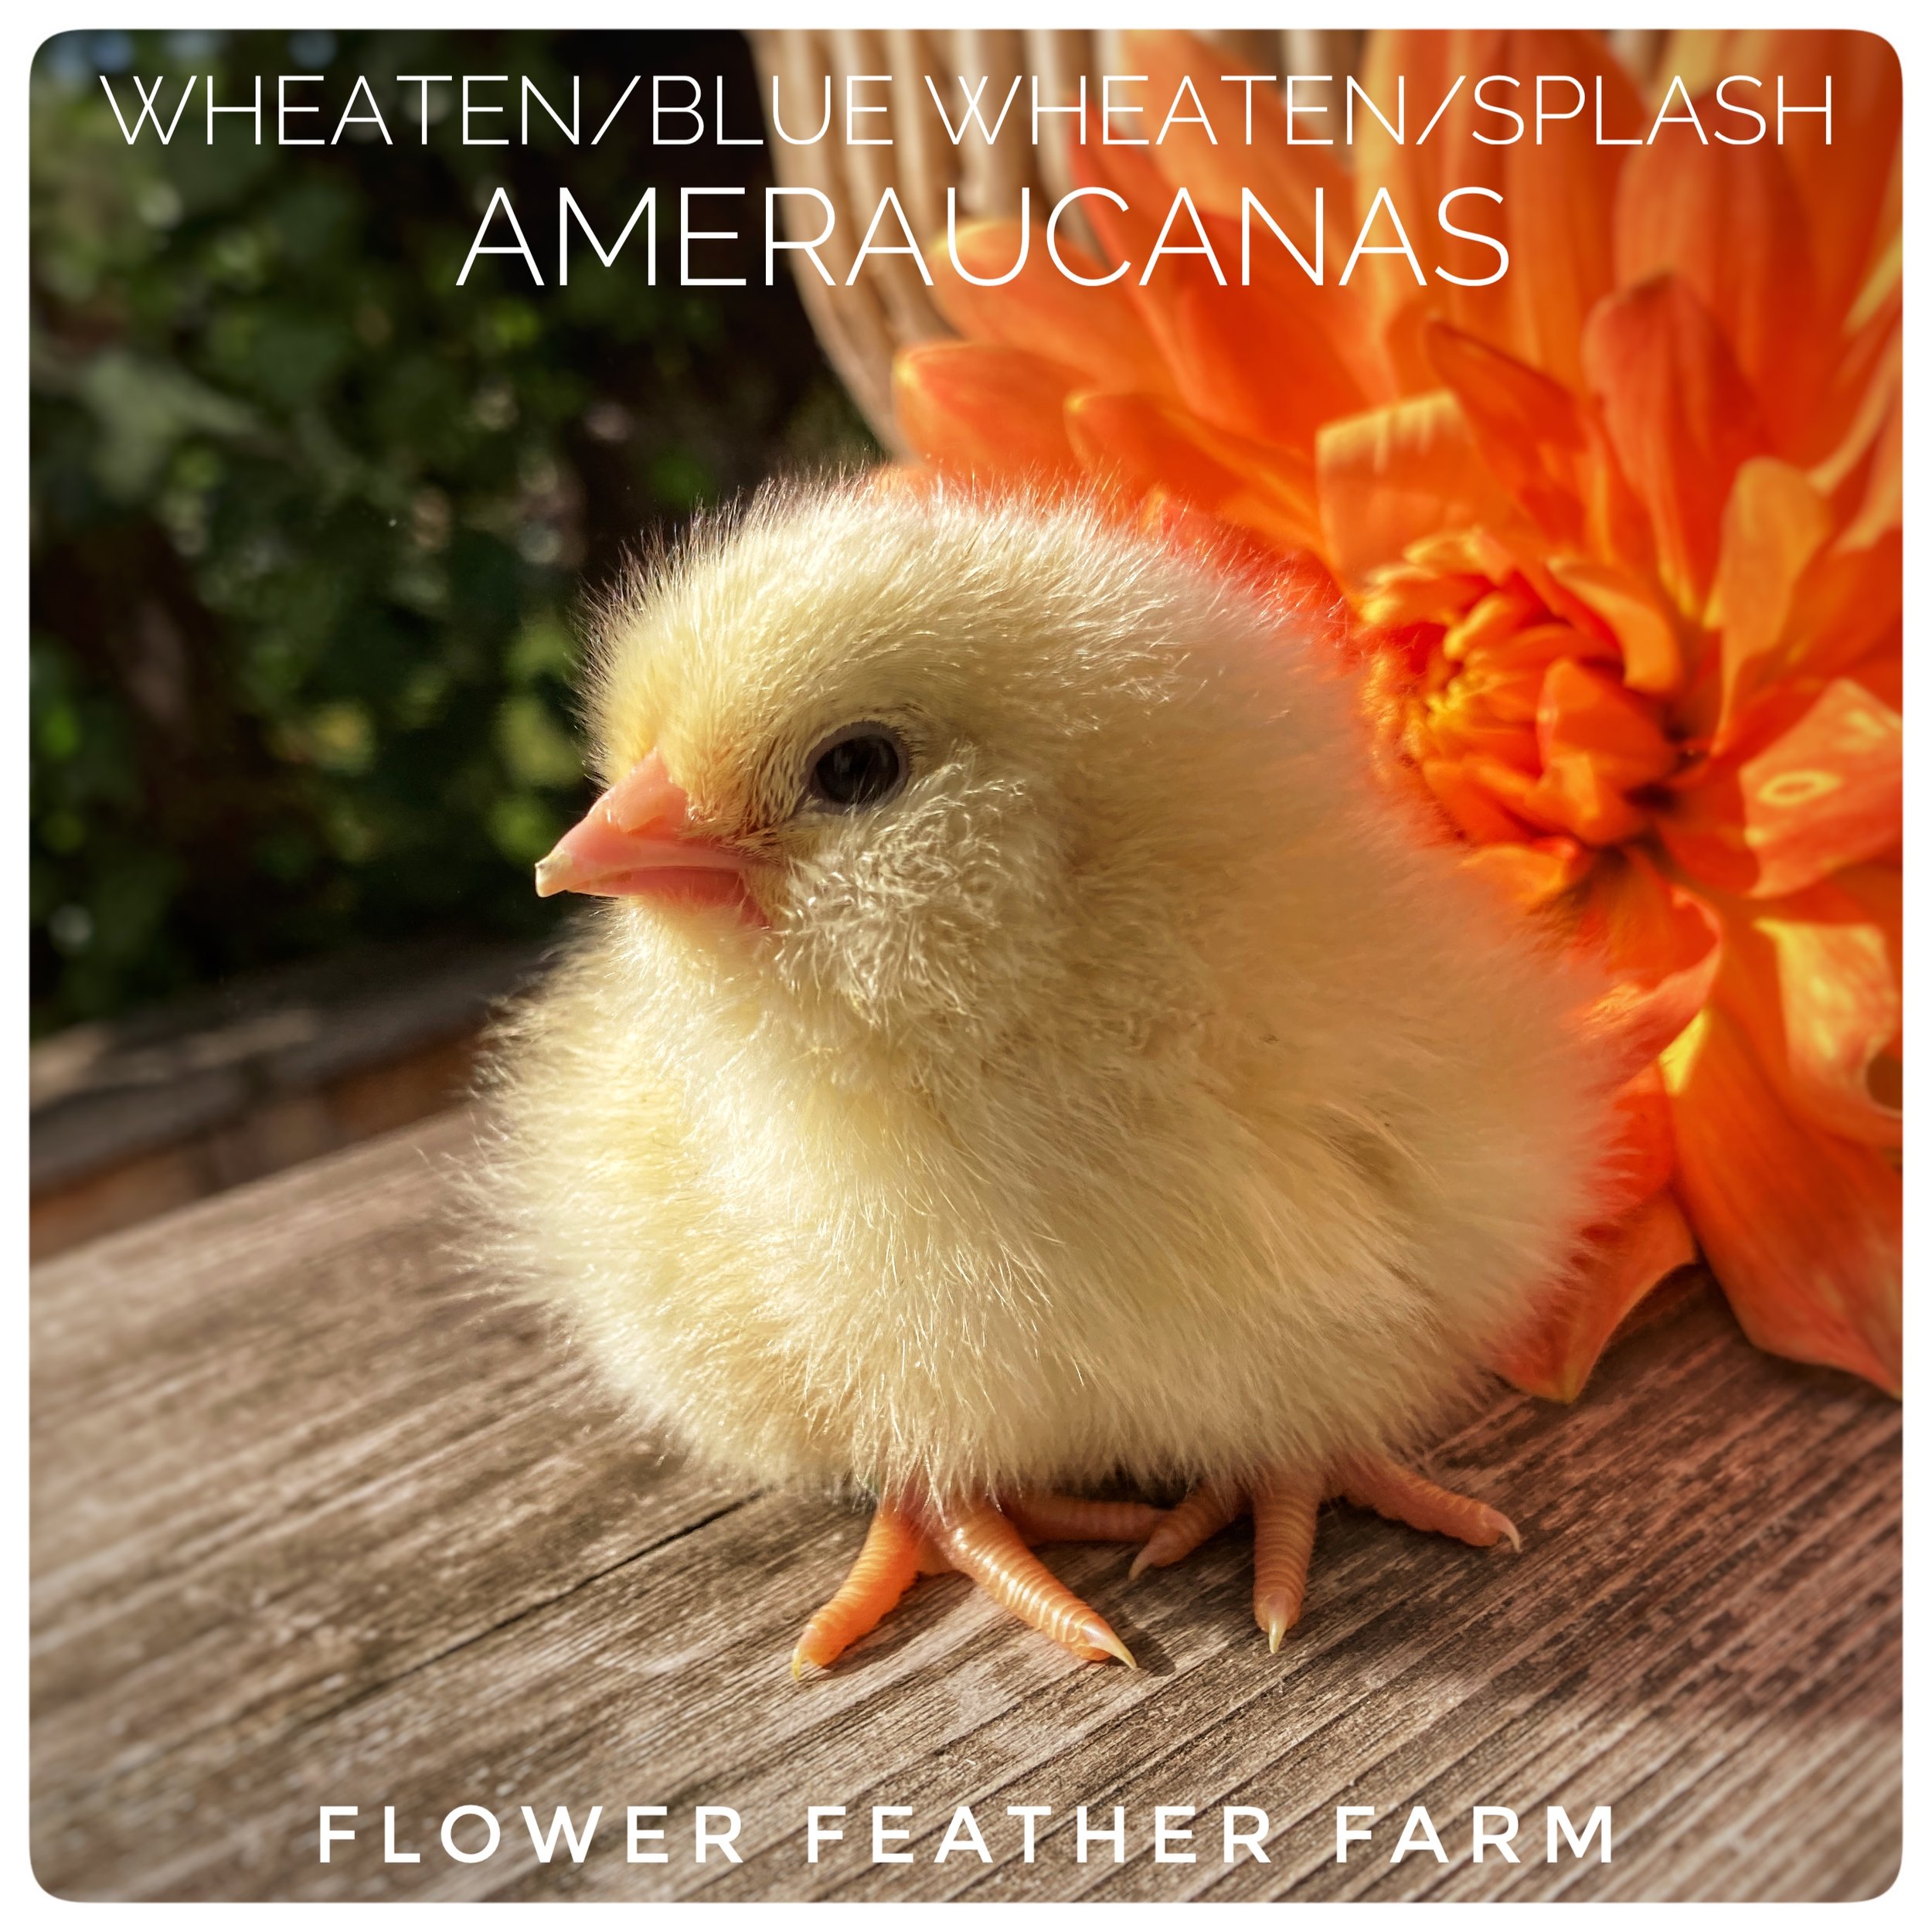 Wheaten/Blue Wheaten/Splash Ameraucana Chicks at Flower Feather Farm, Specialty Chicks and Dahlia Tubers 